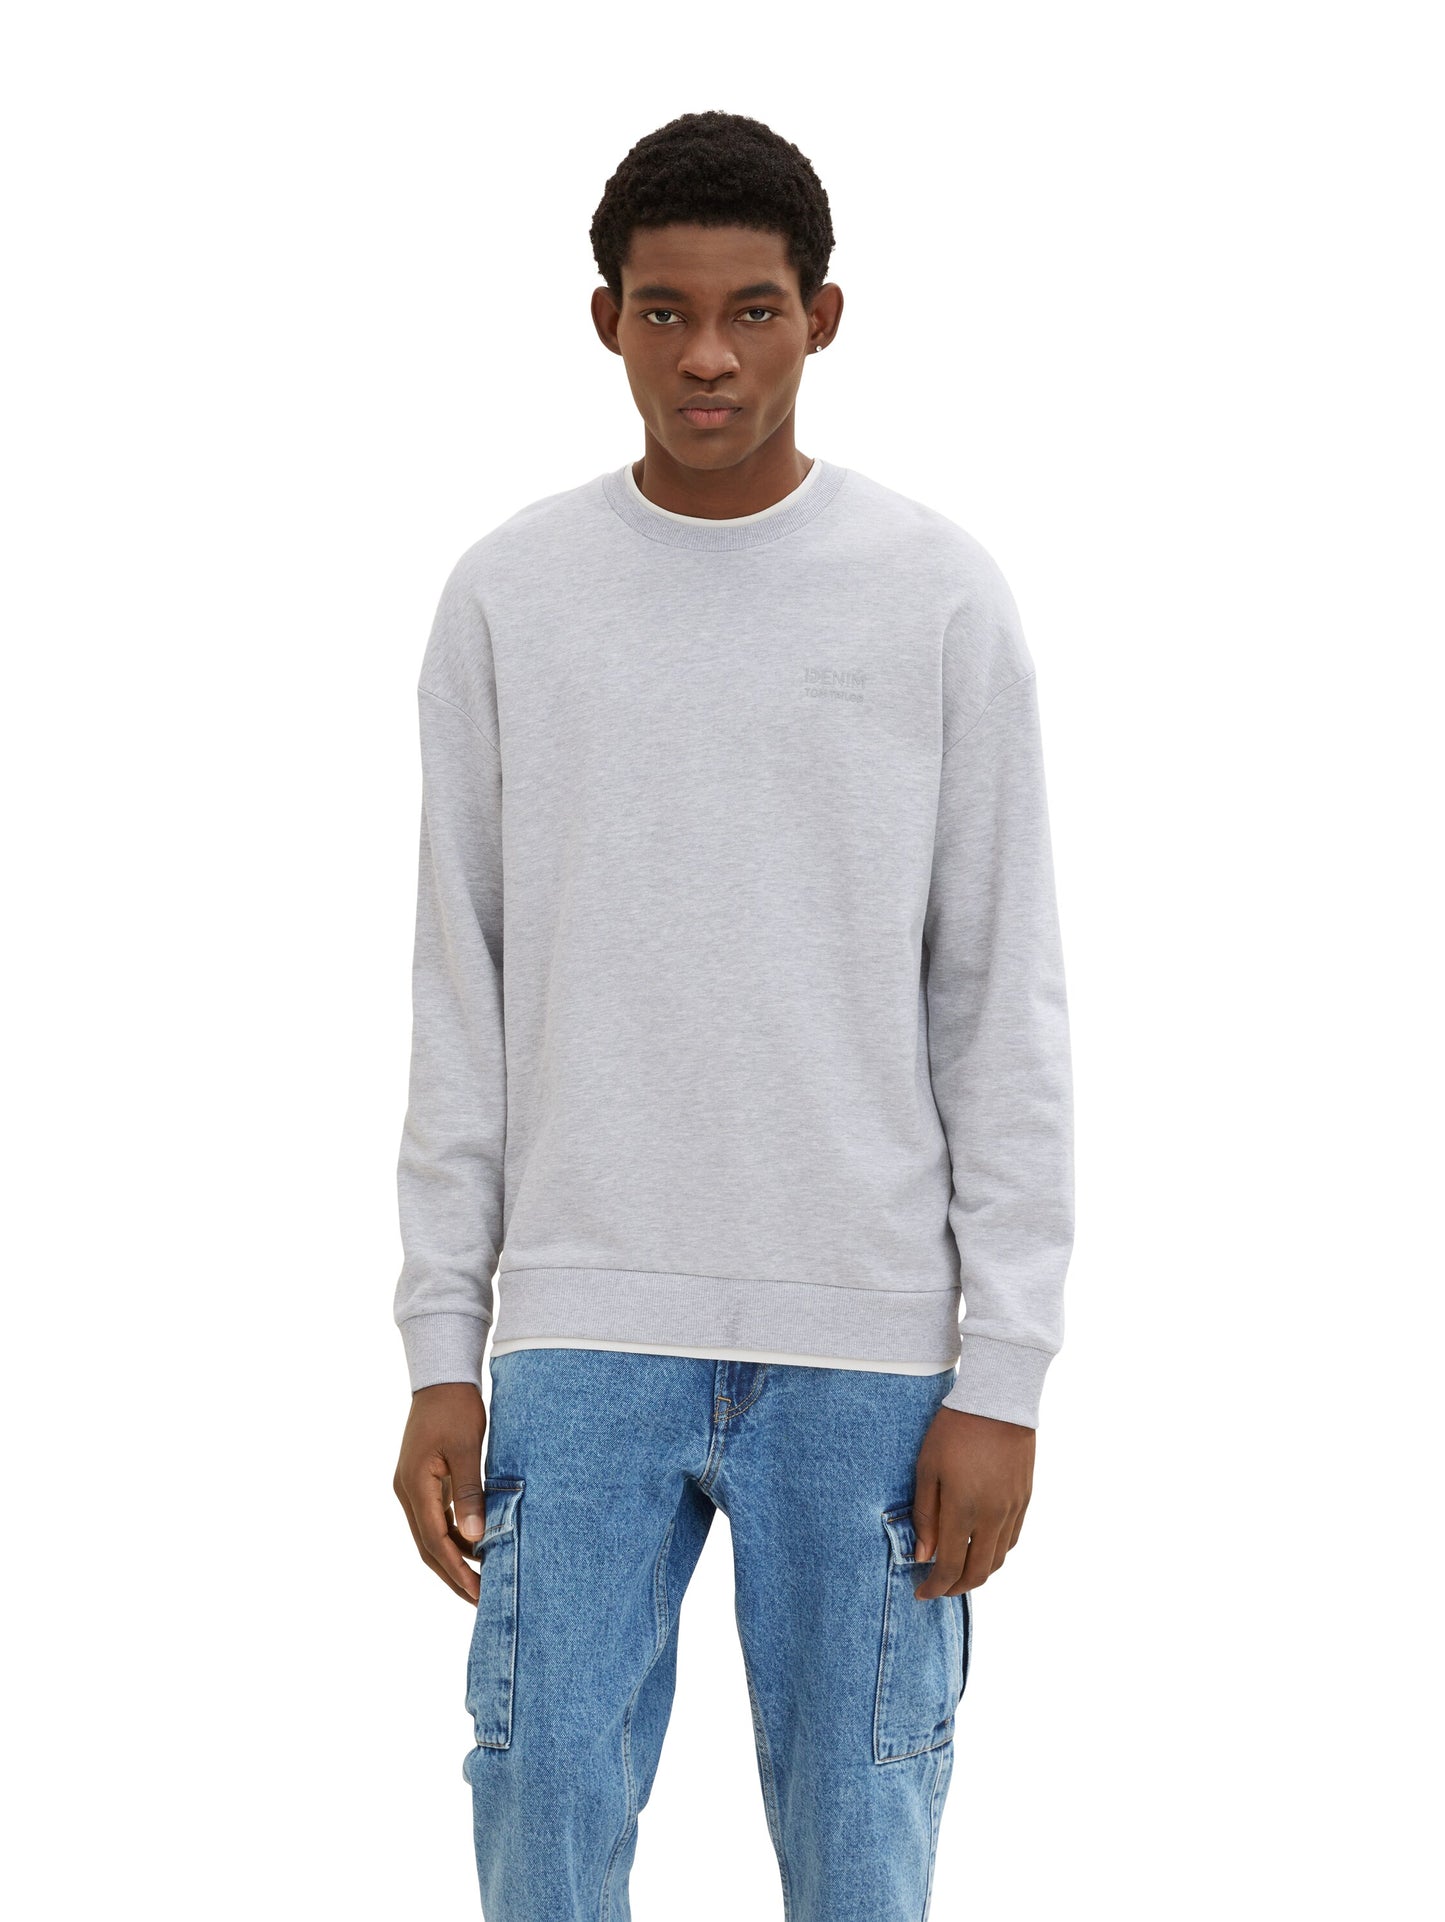 Basic Sweatshirt (Light Stone Gr)